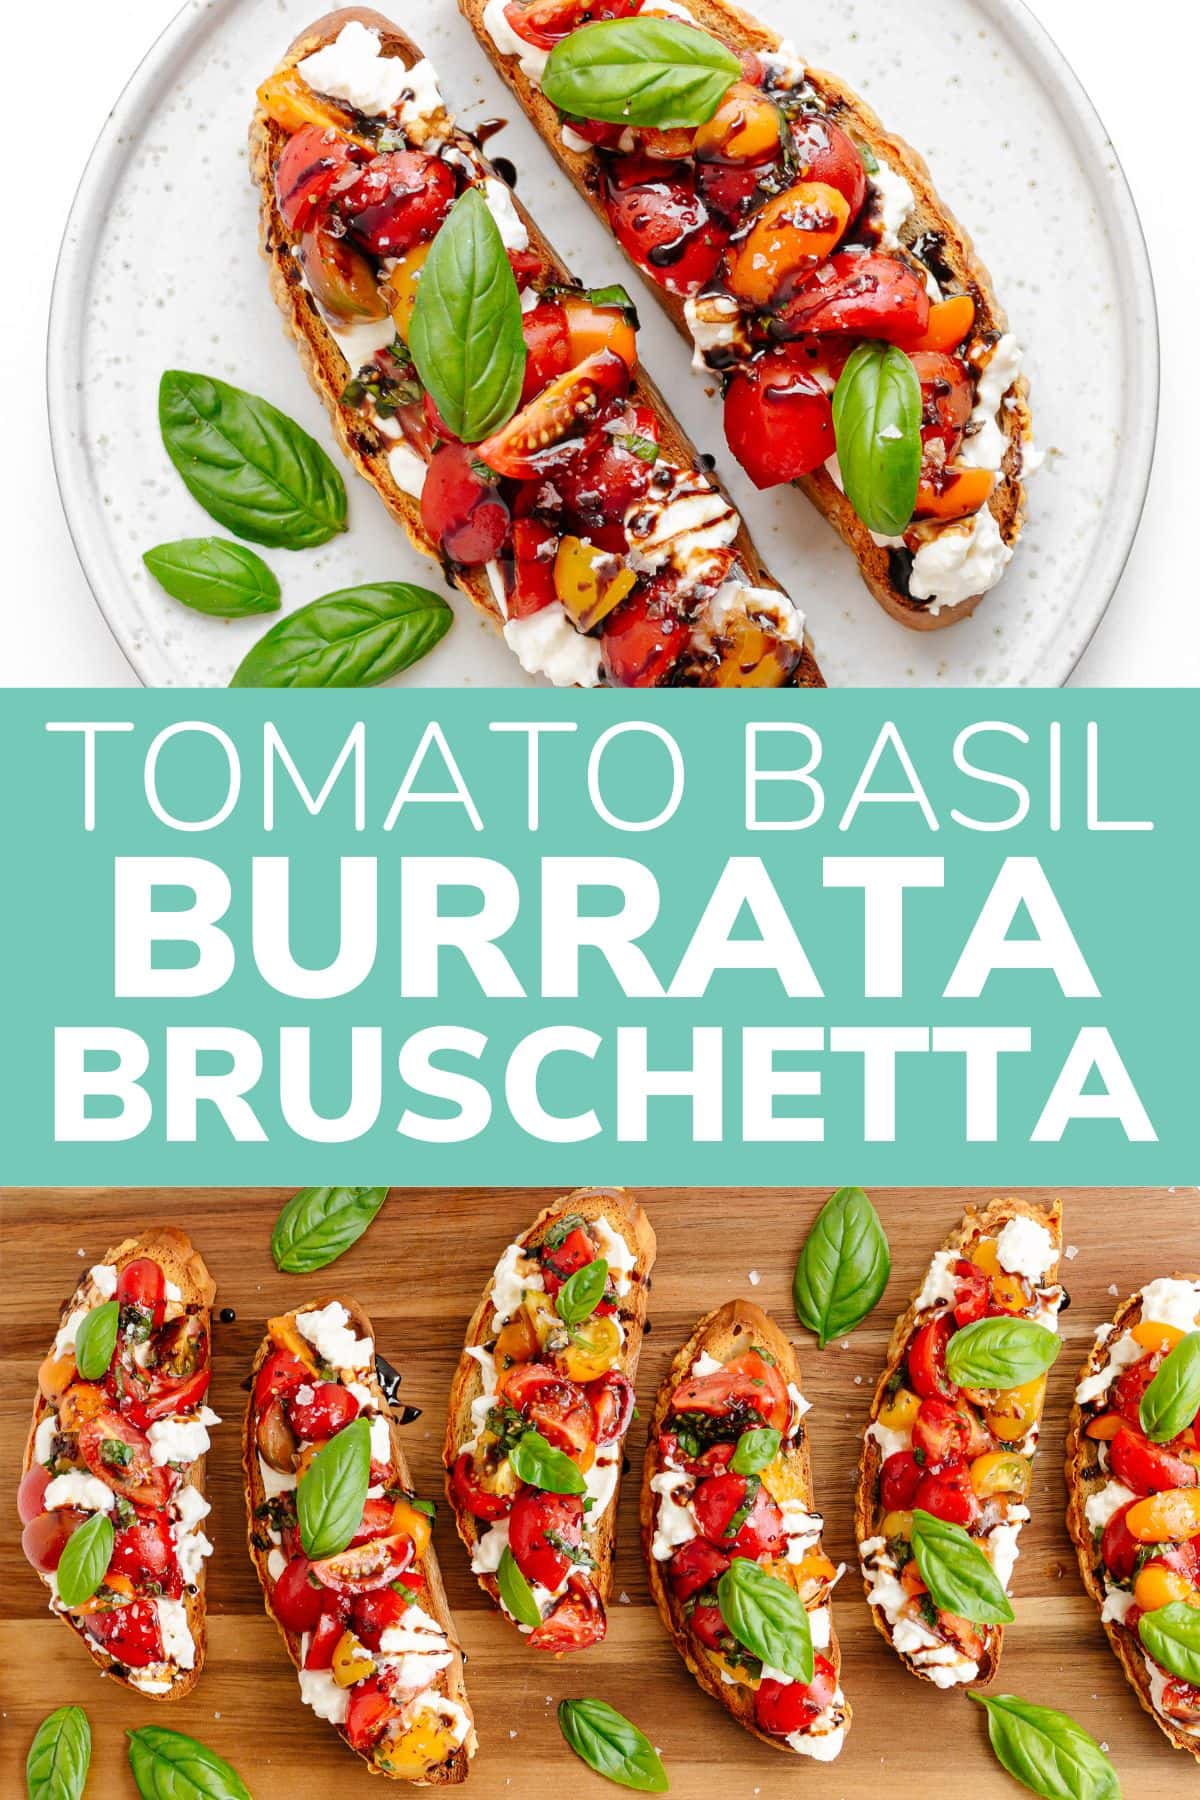 Graphic with bruschetta photos and text overlay that reads "Tomato Basil Burrata Bruschetta".